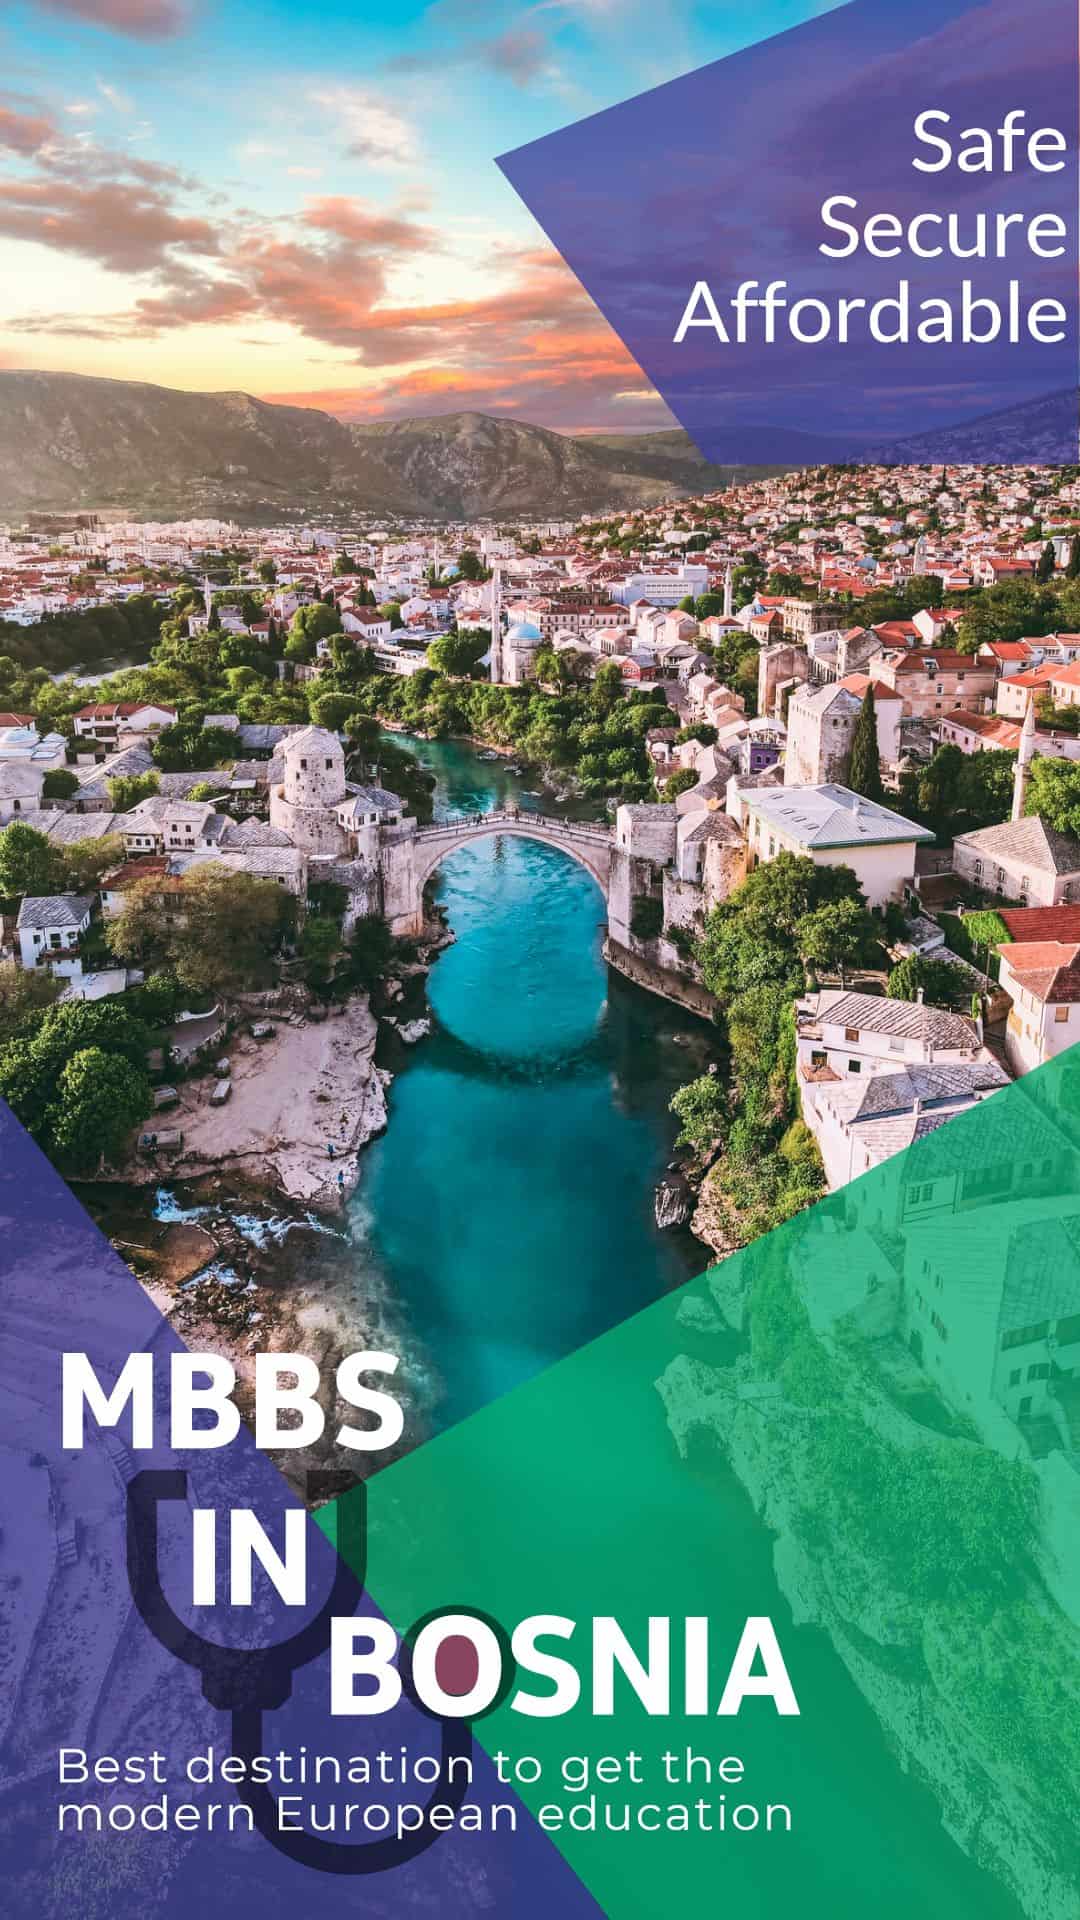 Study MBBS in Georgia for European modern mdedical education 